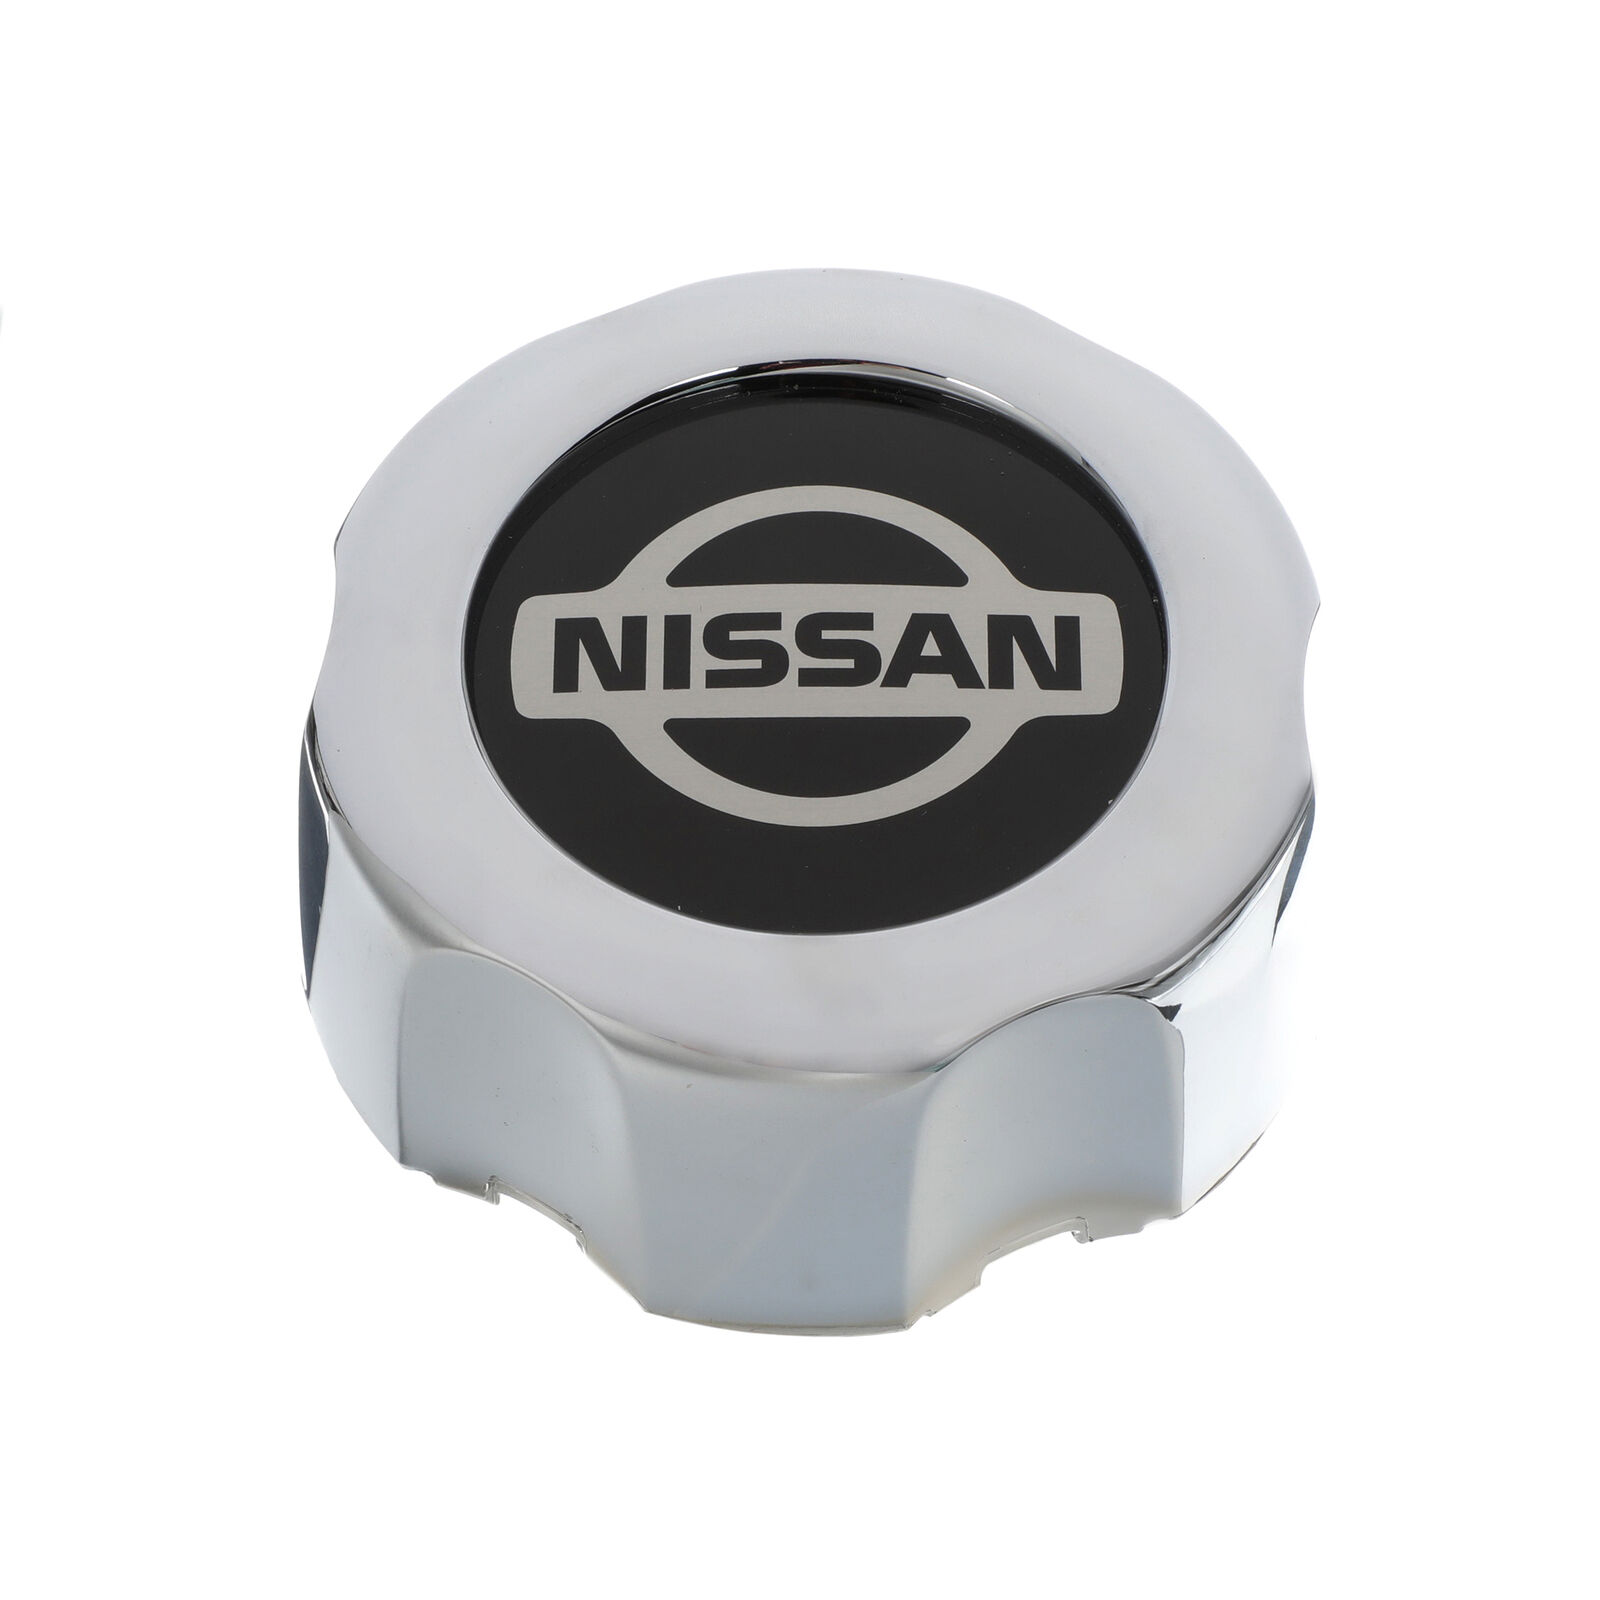 Nissan Frontier & Pickup 4WD Chrome Rear Aluminum Wheel Cover Center Cap OEM NEW